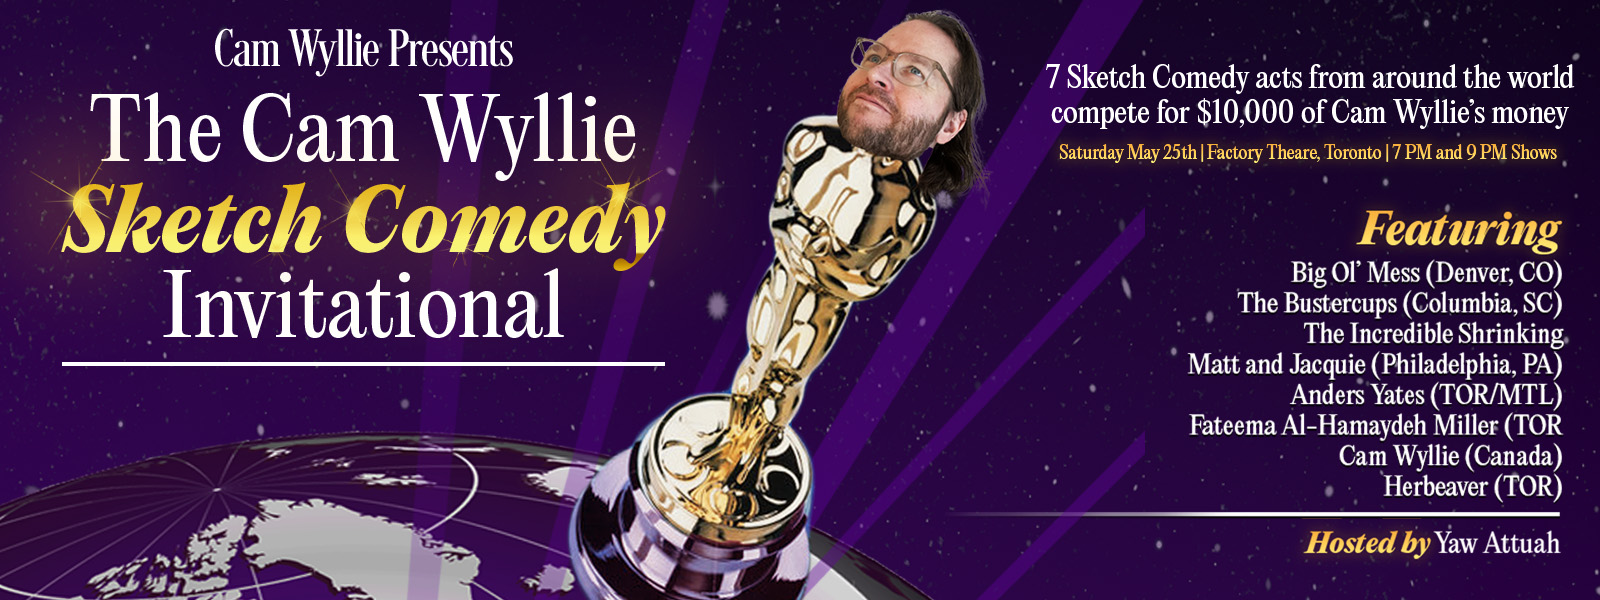 Cam Wyllie Presents: The Cam Wyllie Sketch Comedy Invitational show poster